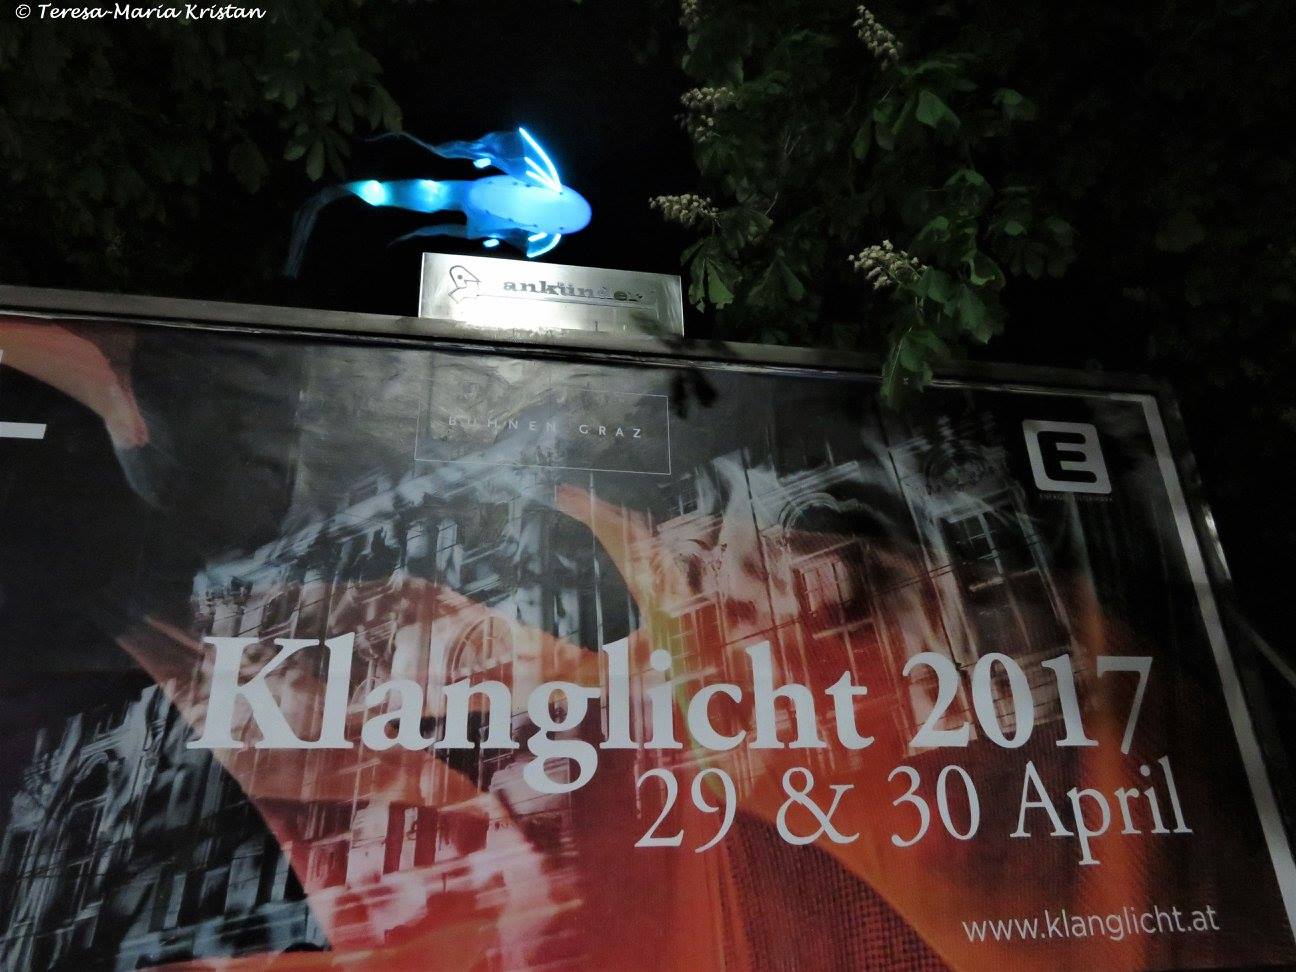 Klanglicht 2017 Graz